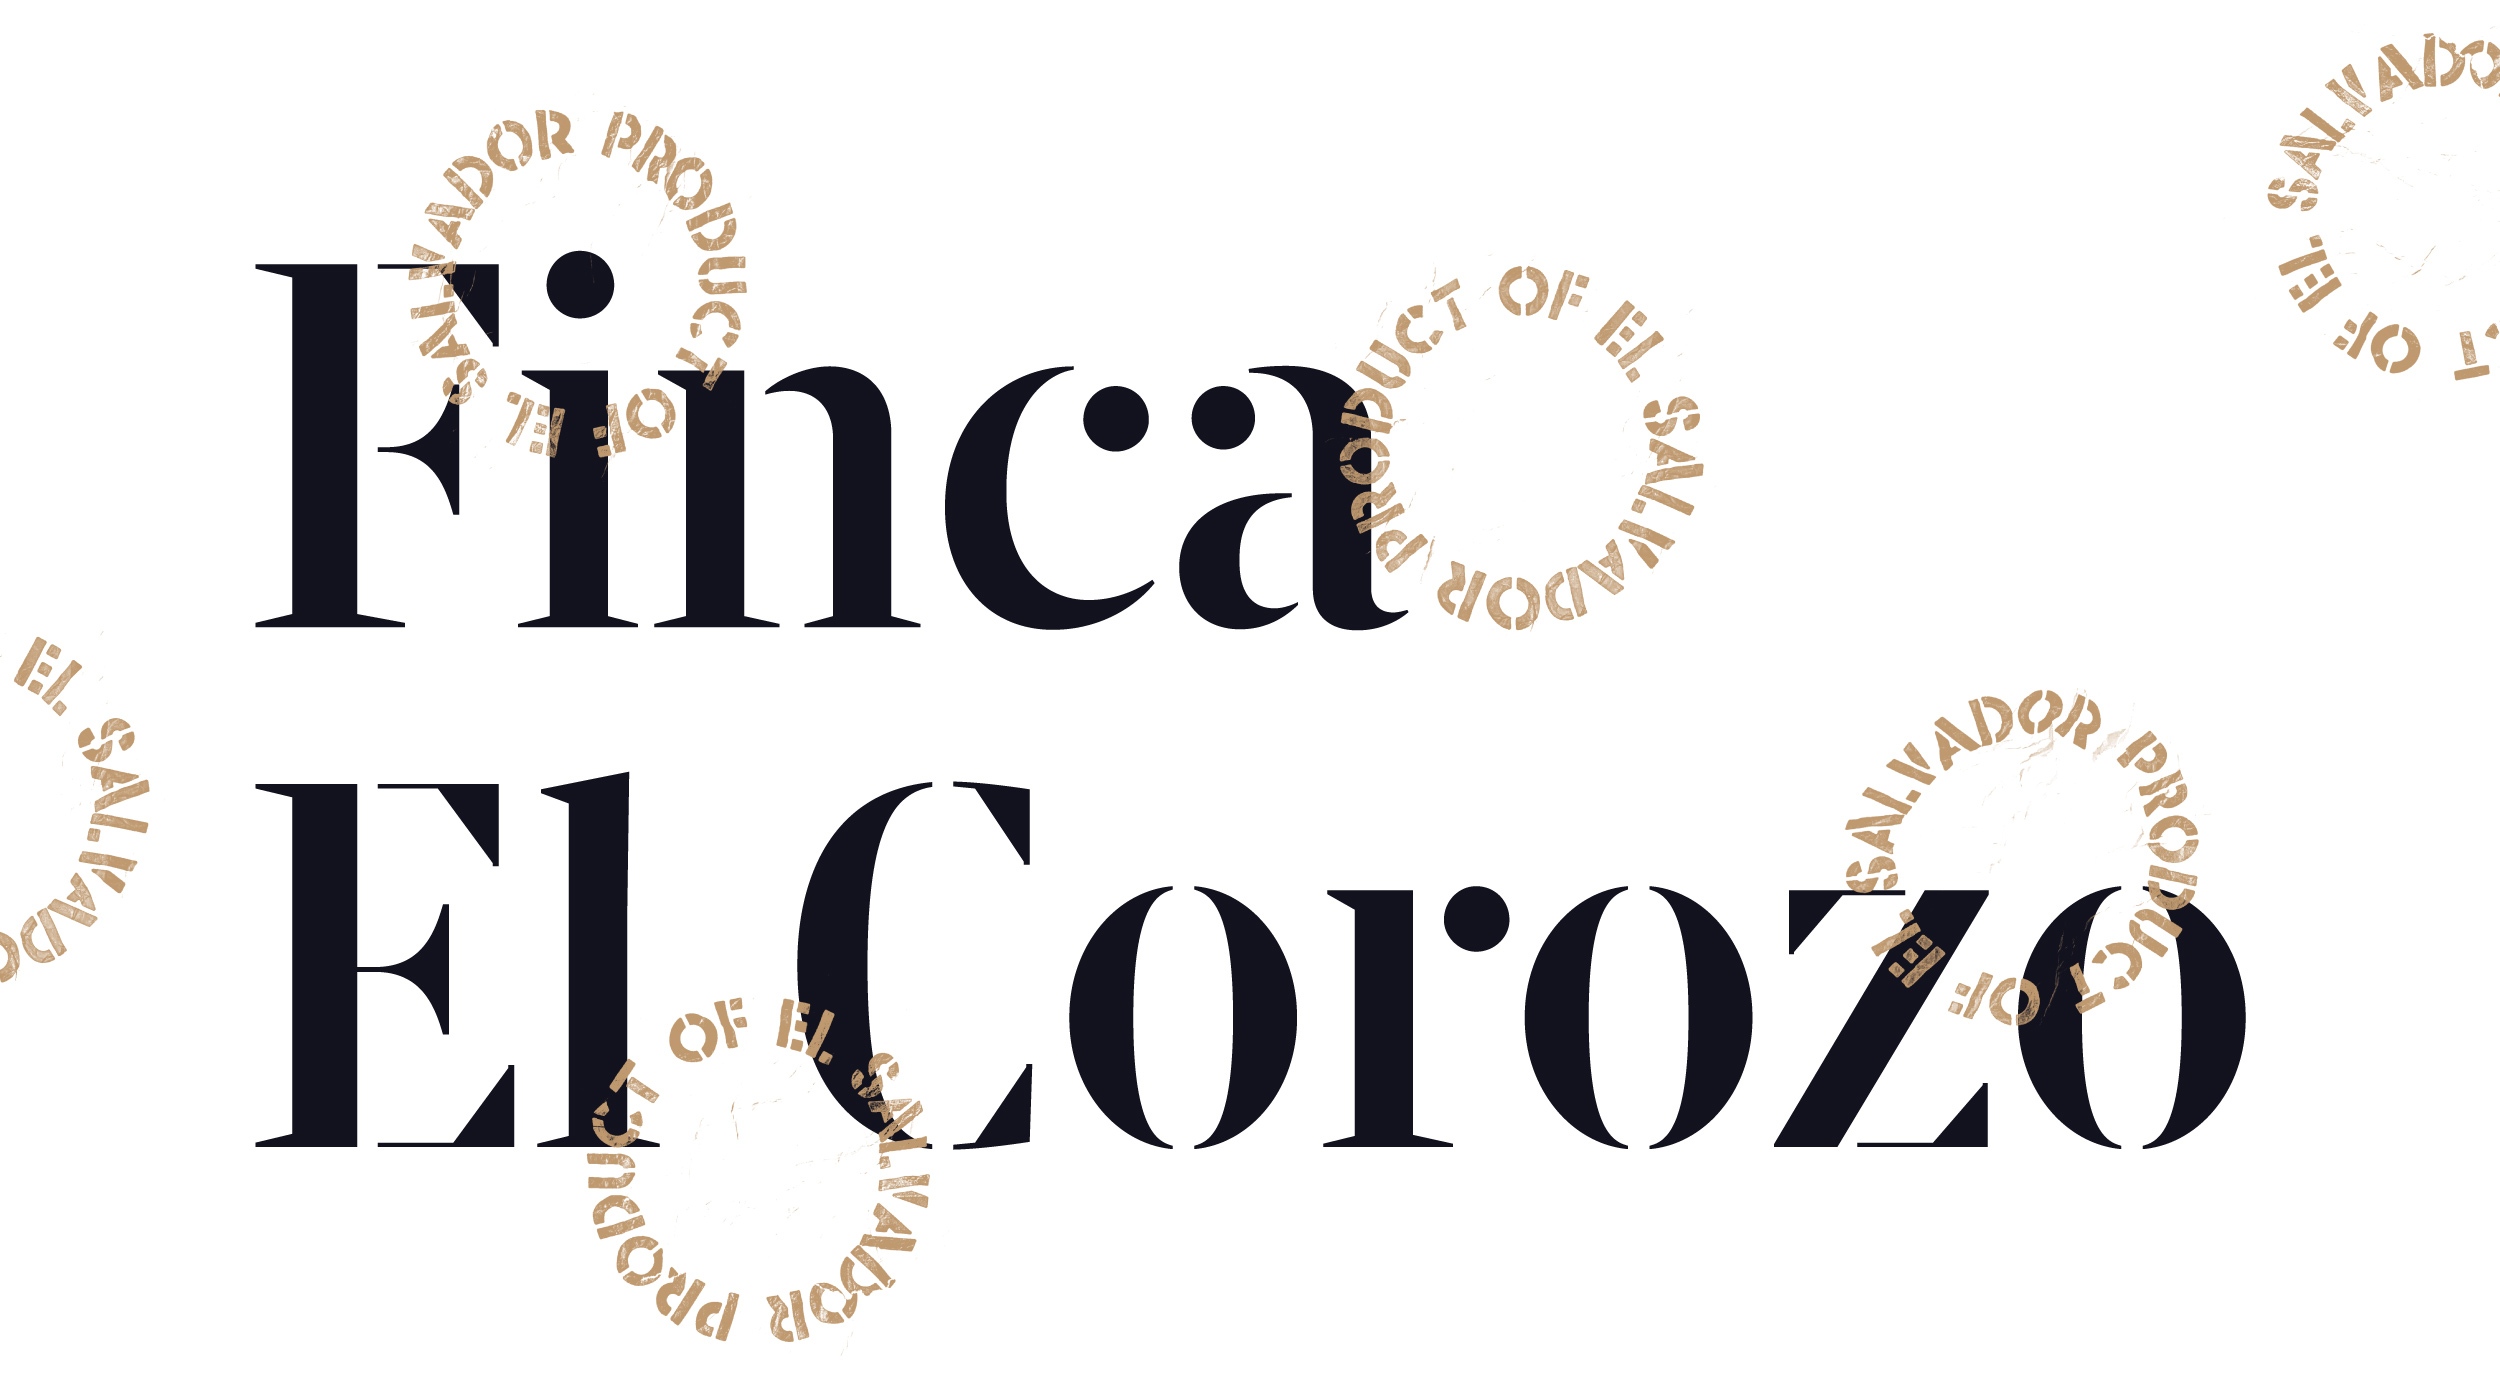 Name of coffee: Finca El Corozo